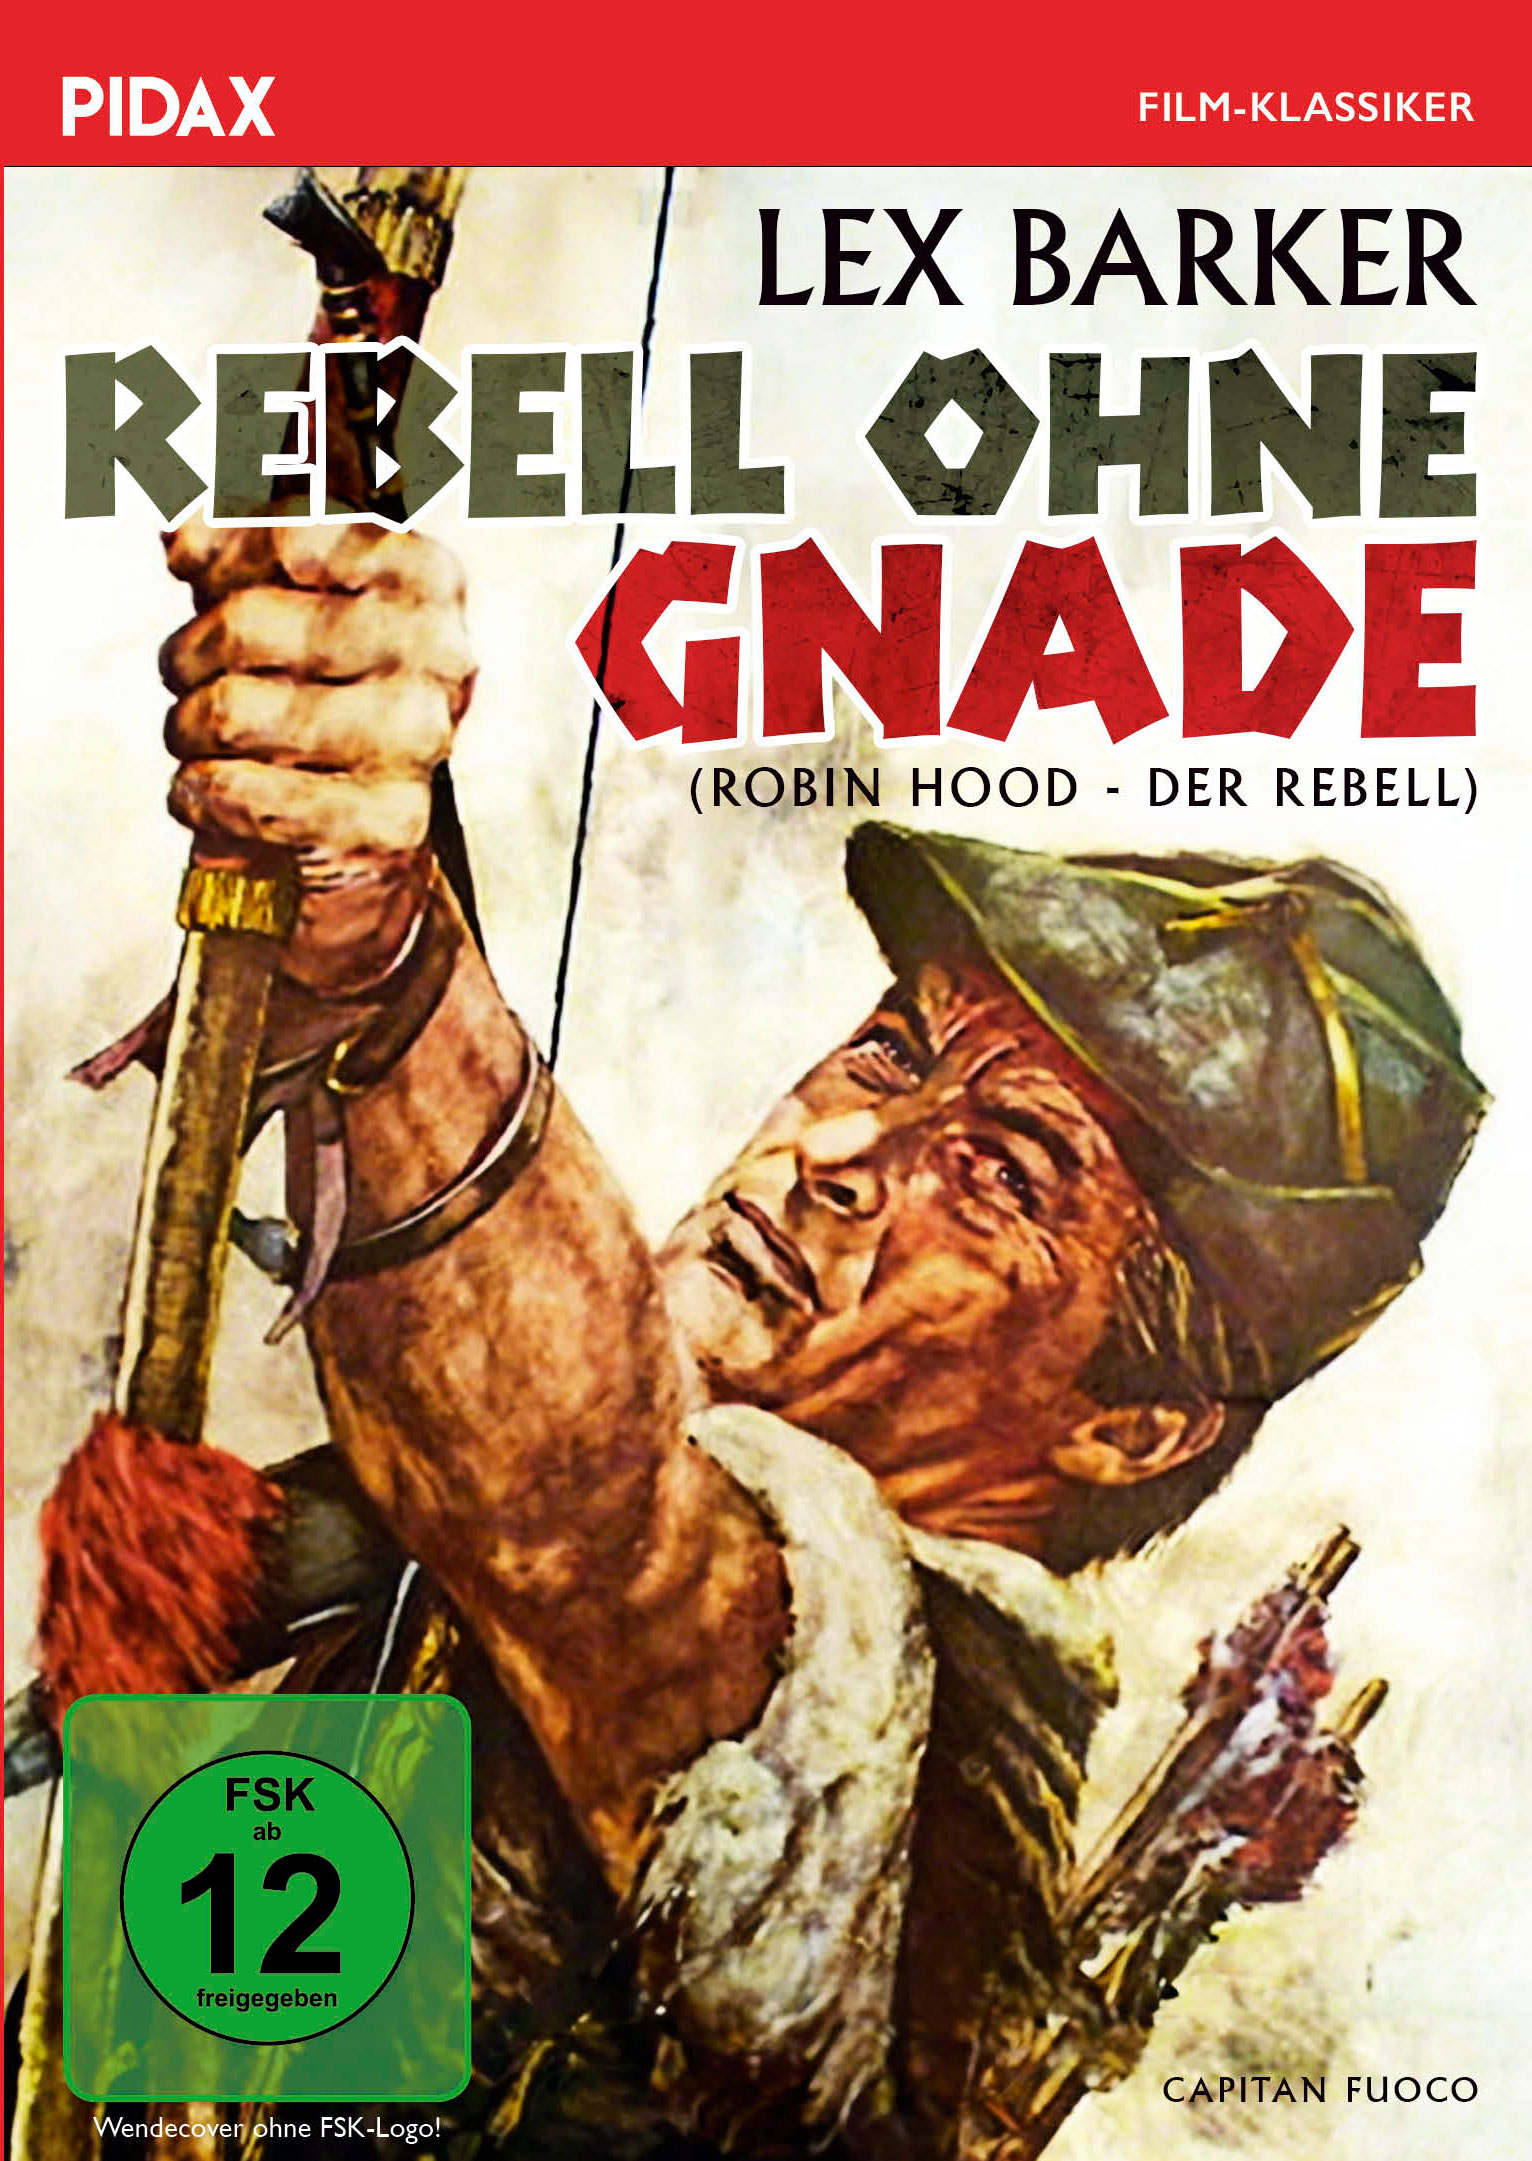 Rebell ohne Gnade (Robin Hood - Der Rebell)